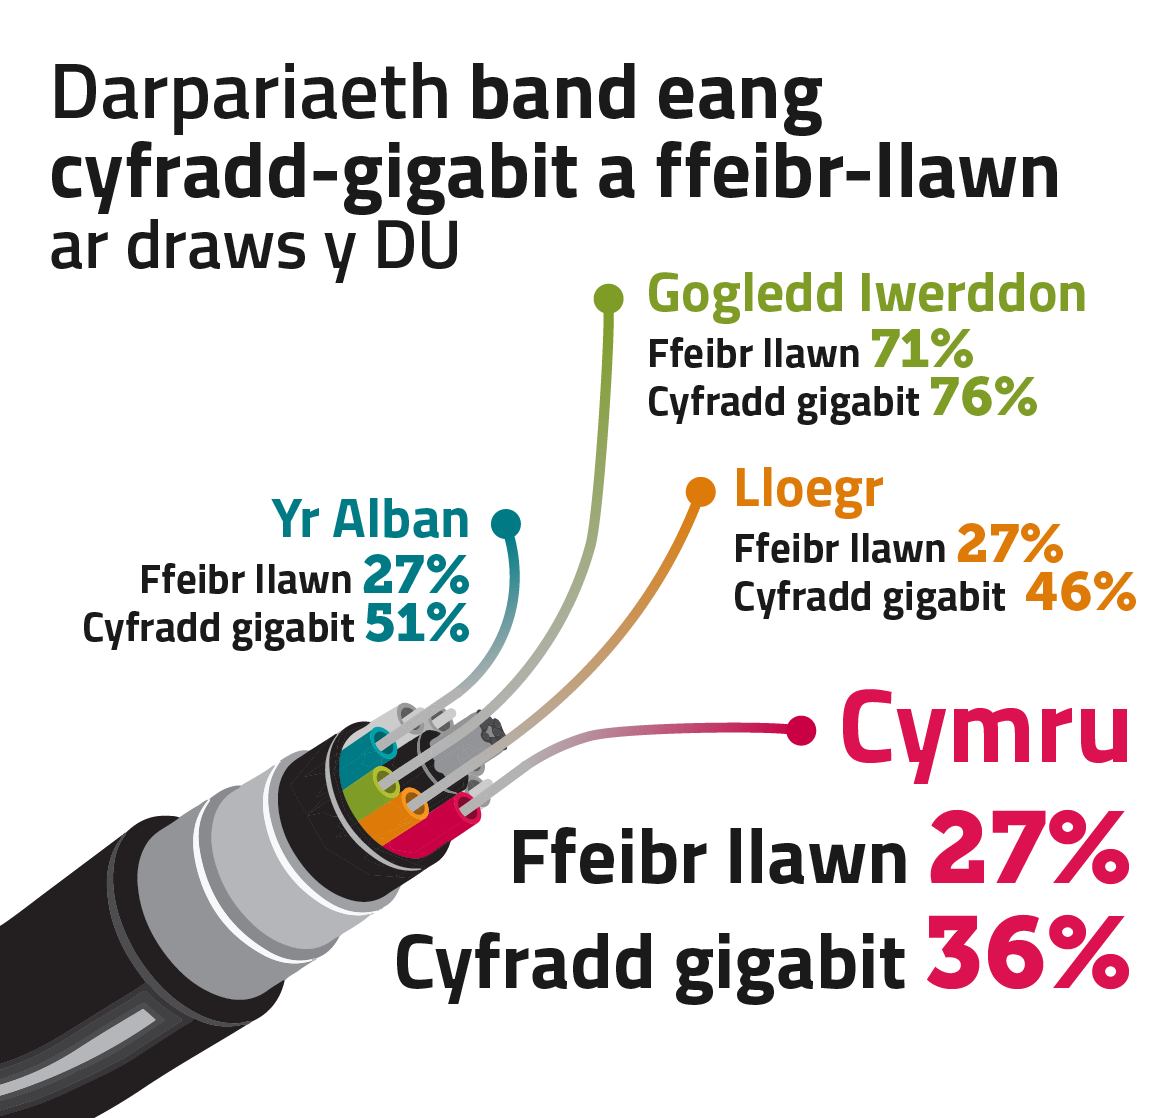 Gigabit-capable and full-fibre broadband in Wales